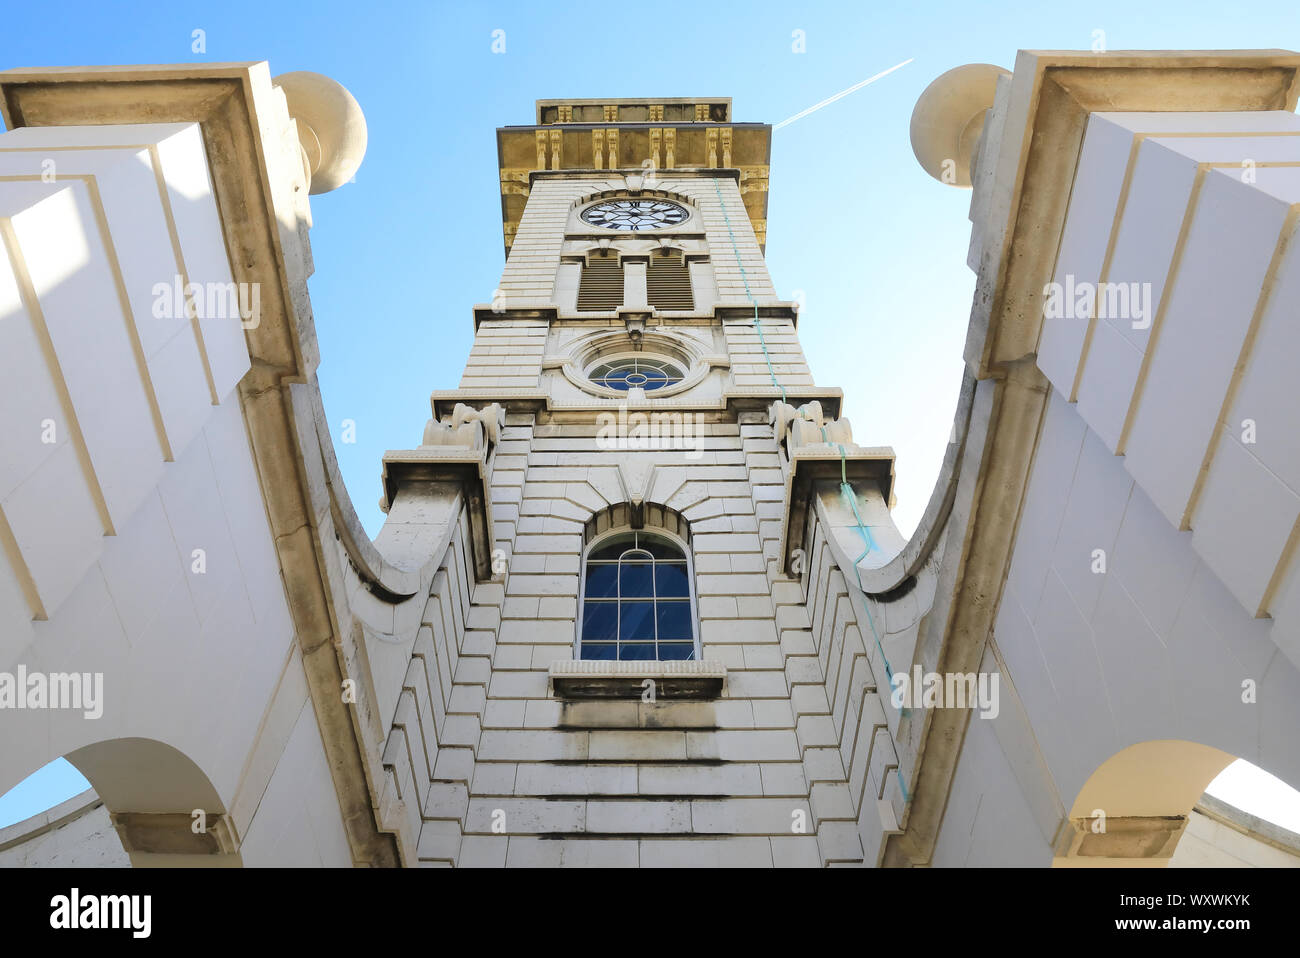 Die vor kurzem restaurierte historische Caledonian Clock Tower, in Caledonian Park, Heimat der ehemaligen großen Tiermarkt, in Islington, London, UK Stockfoto